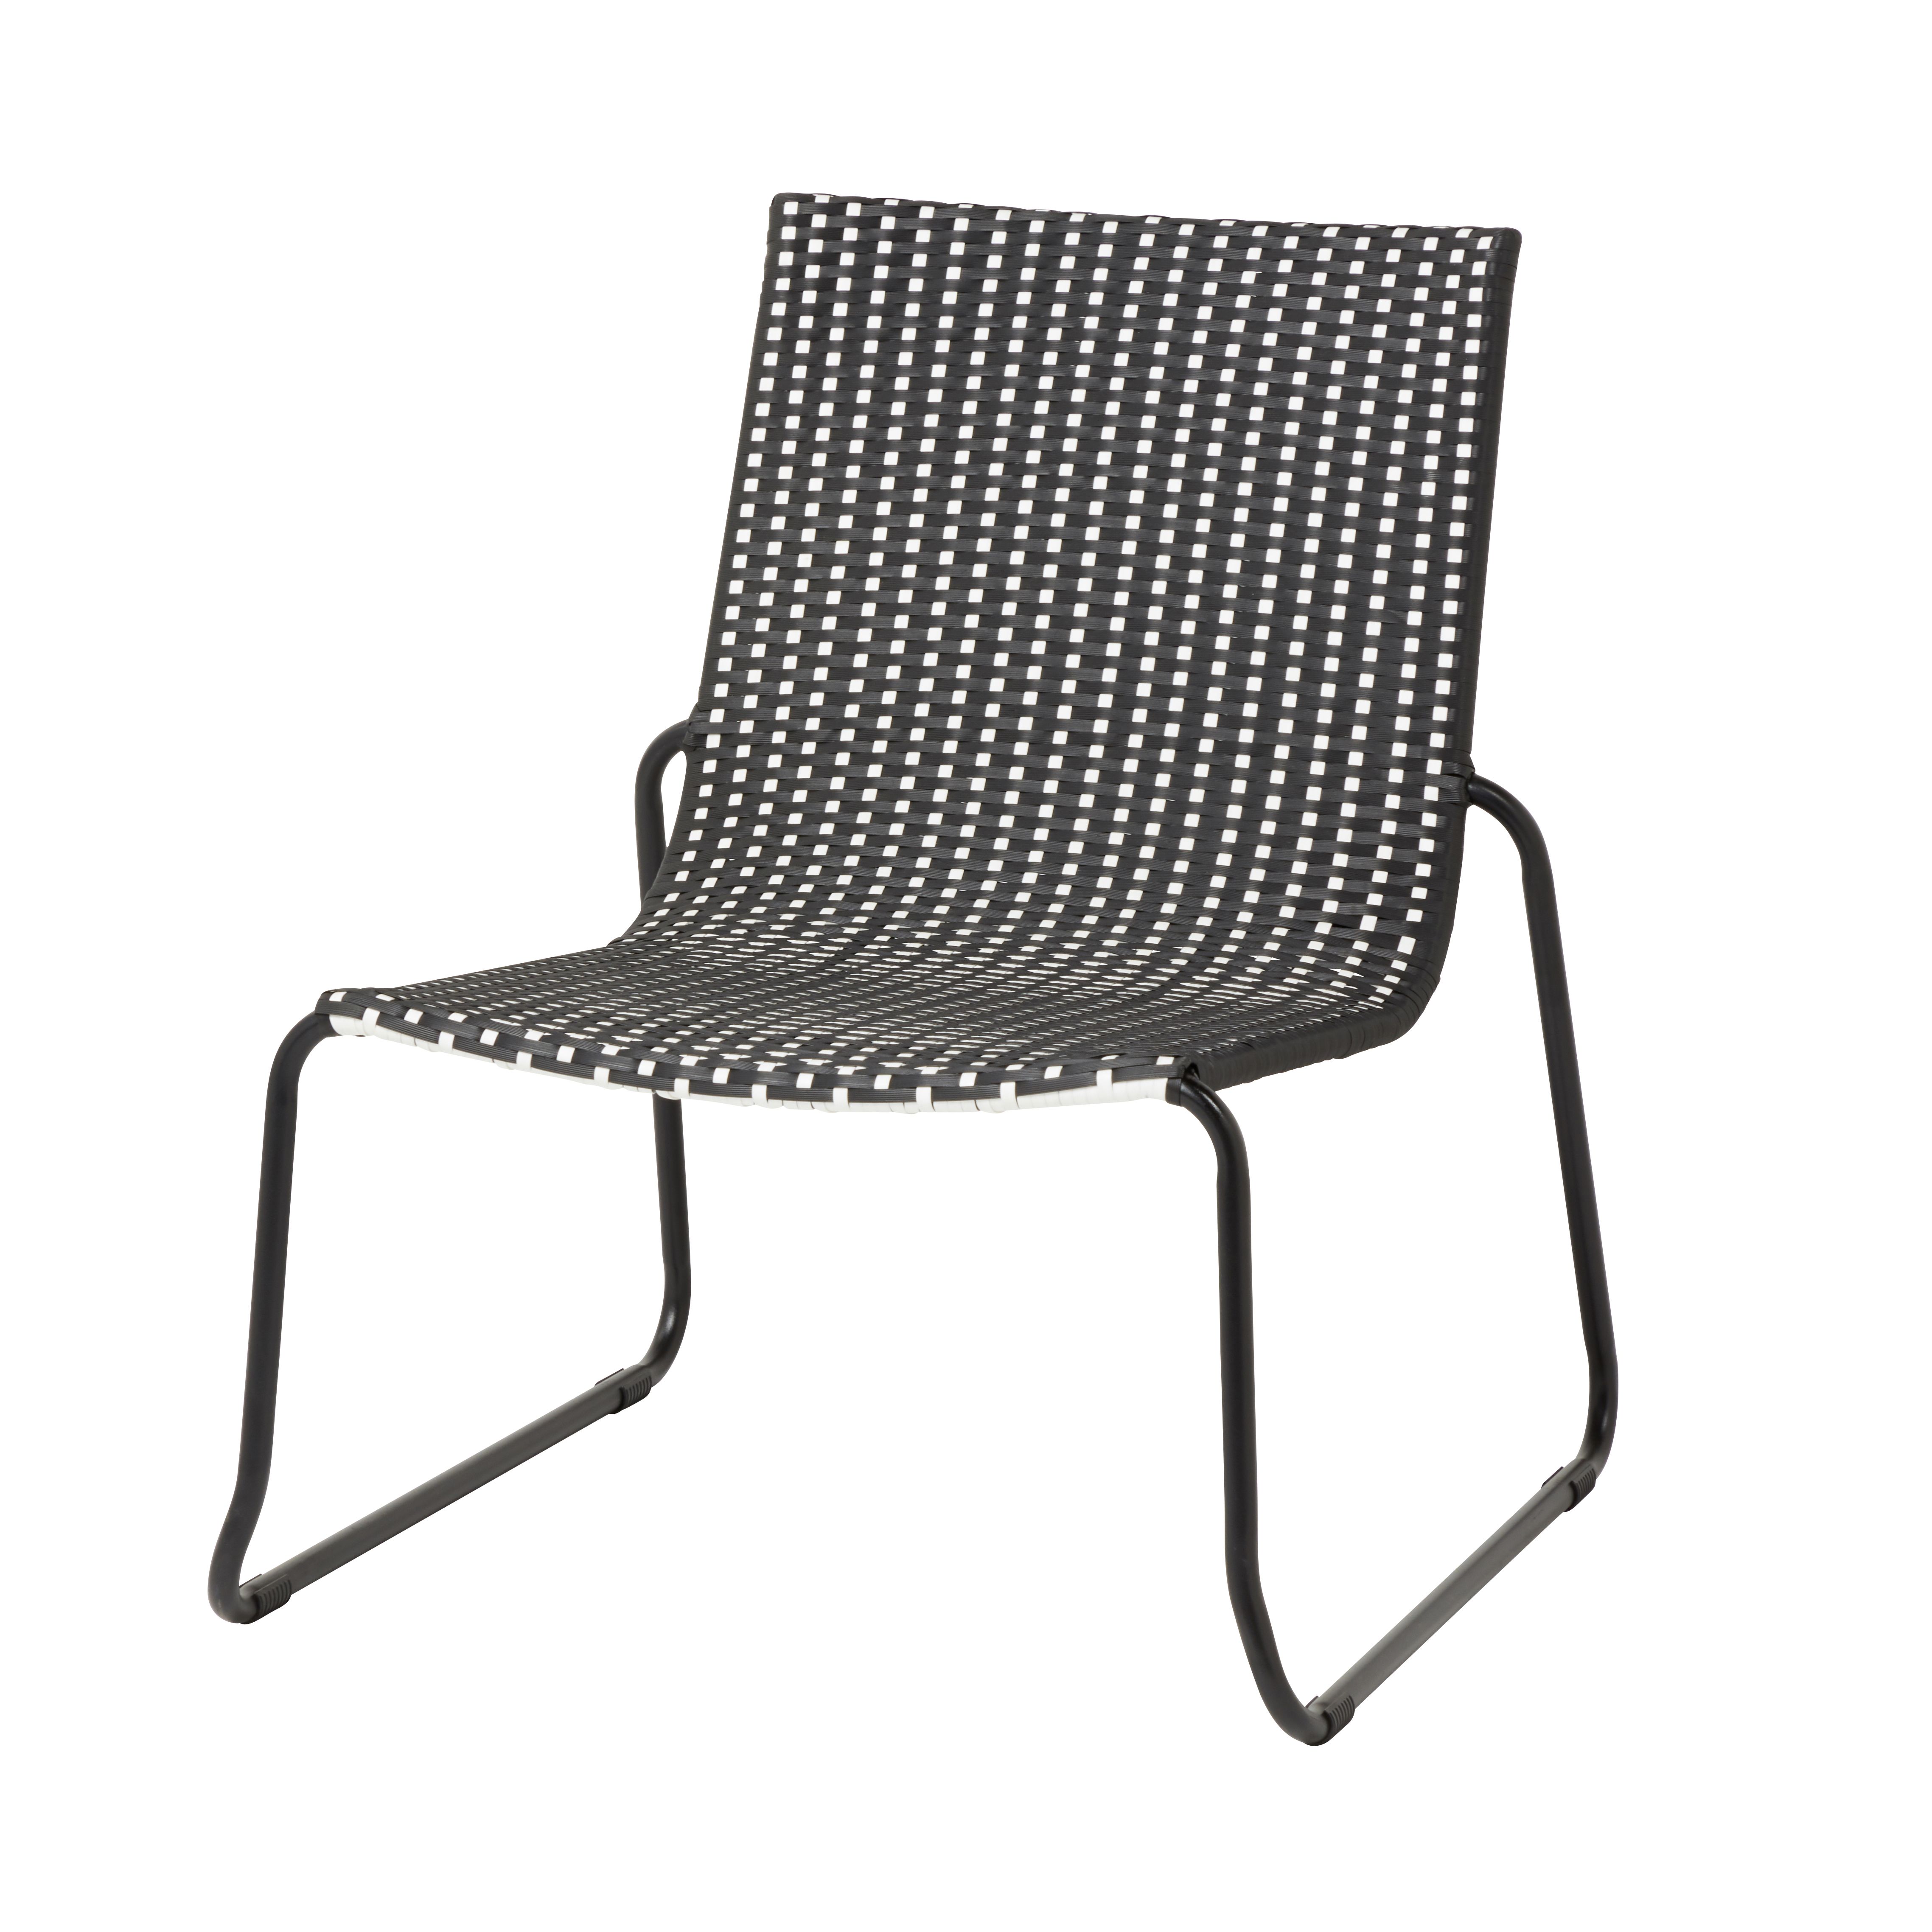 Morillo Black & white Metal Chair